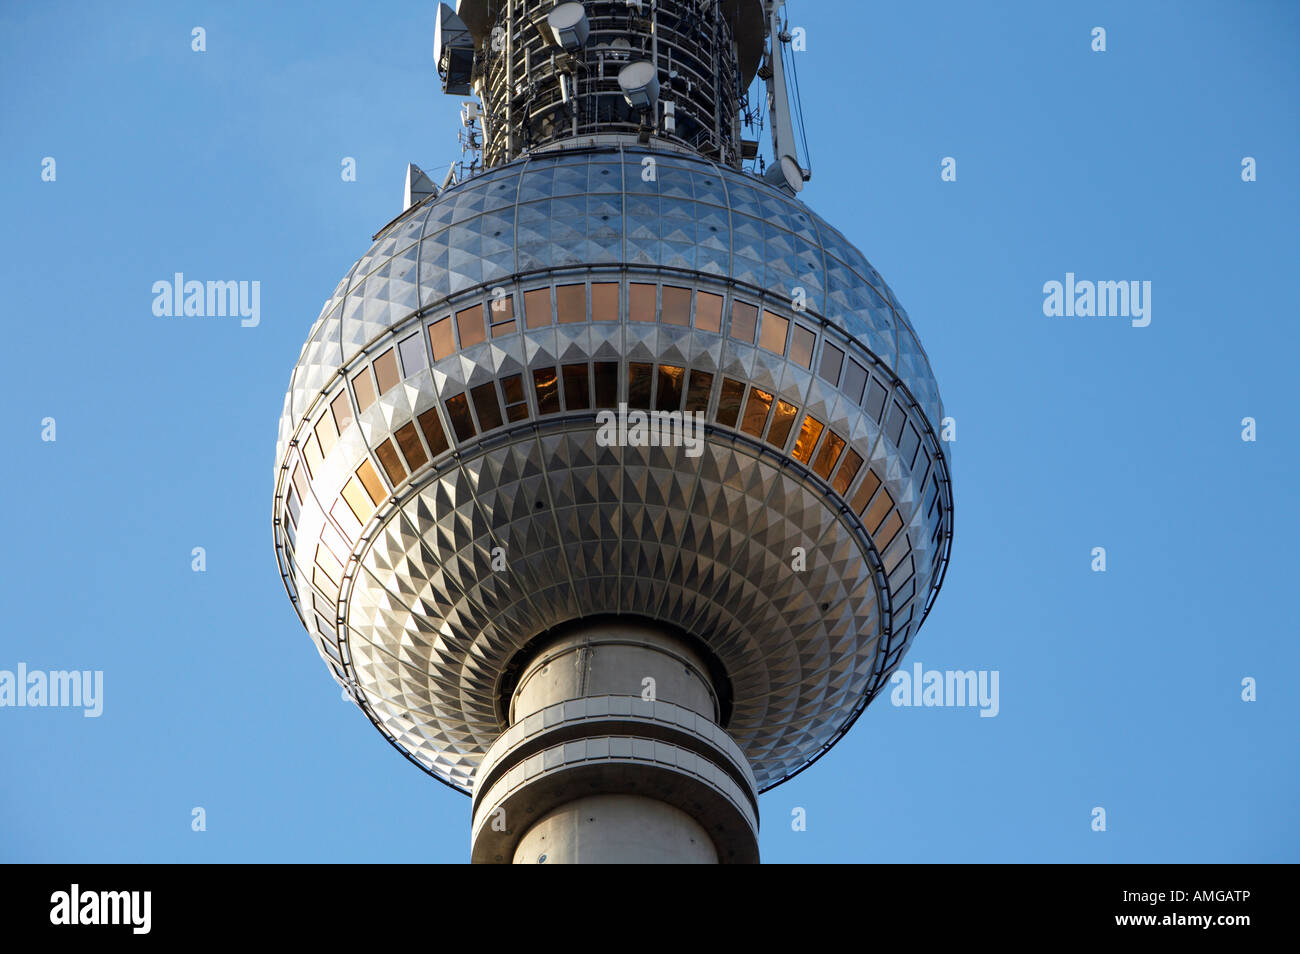 ball of the berliner fernsehturm Berlin TV tower symbol of east berlin Germany Stock Photo